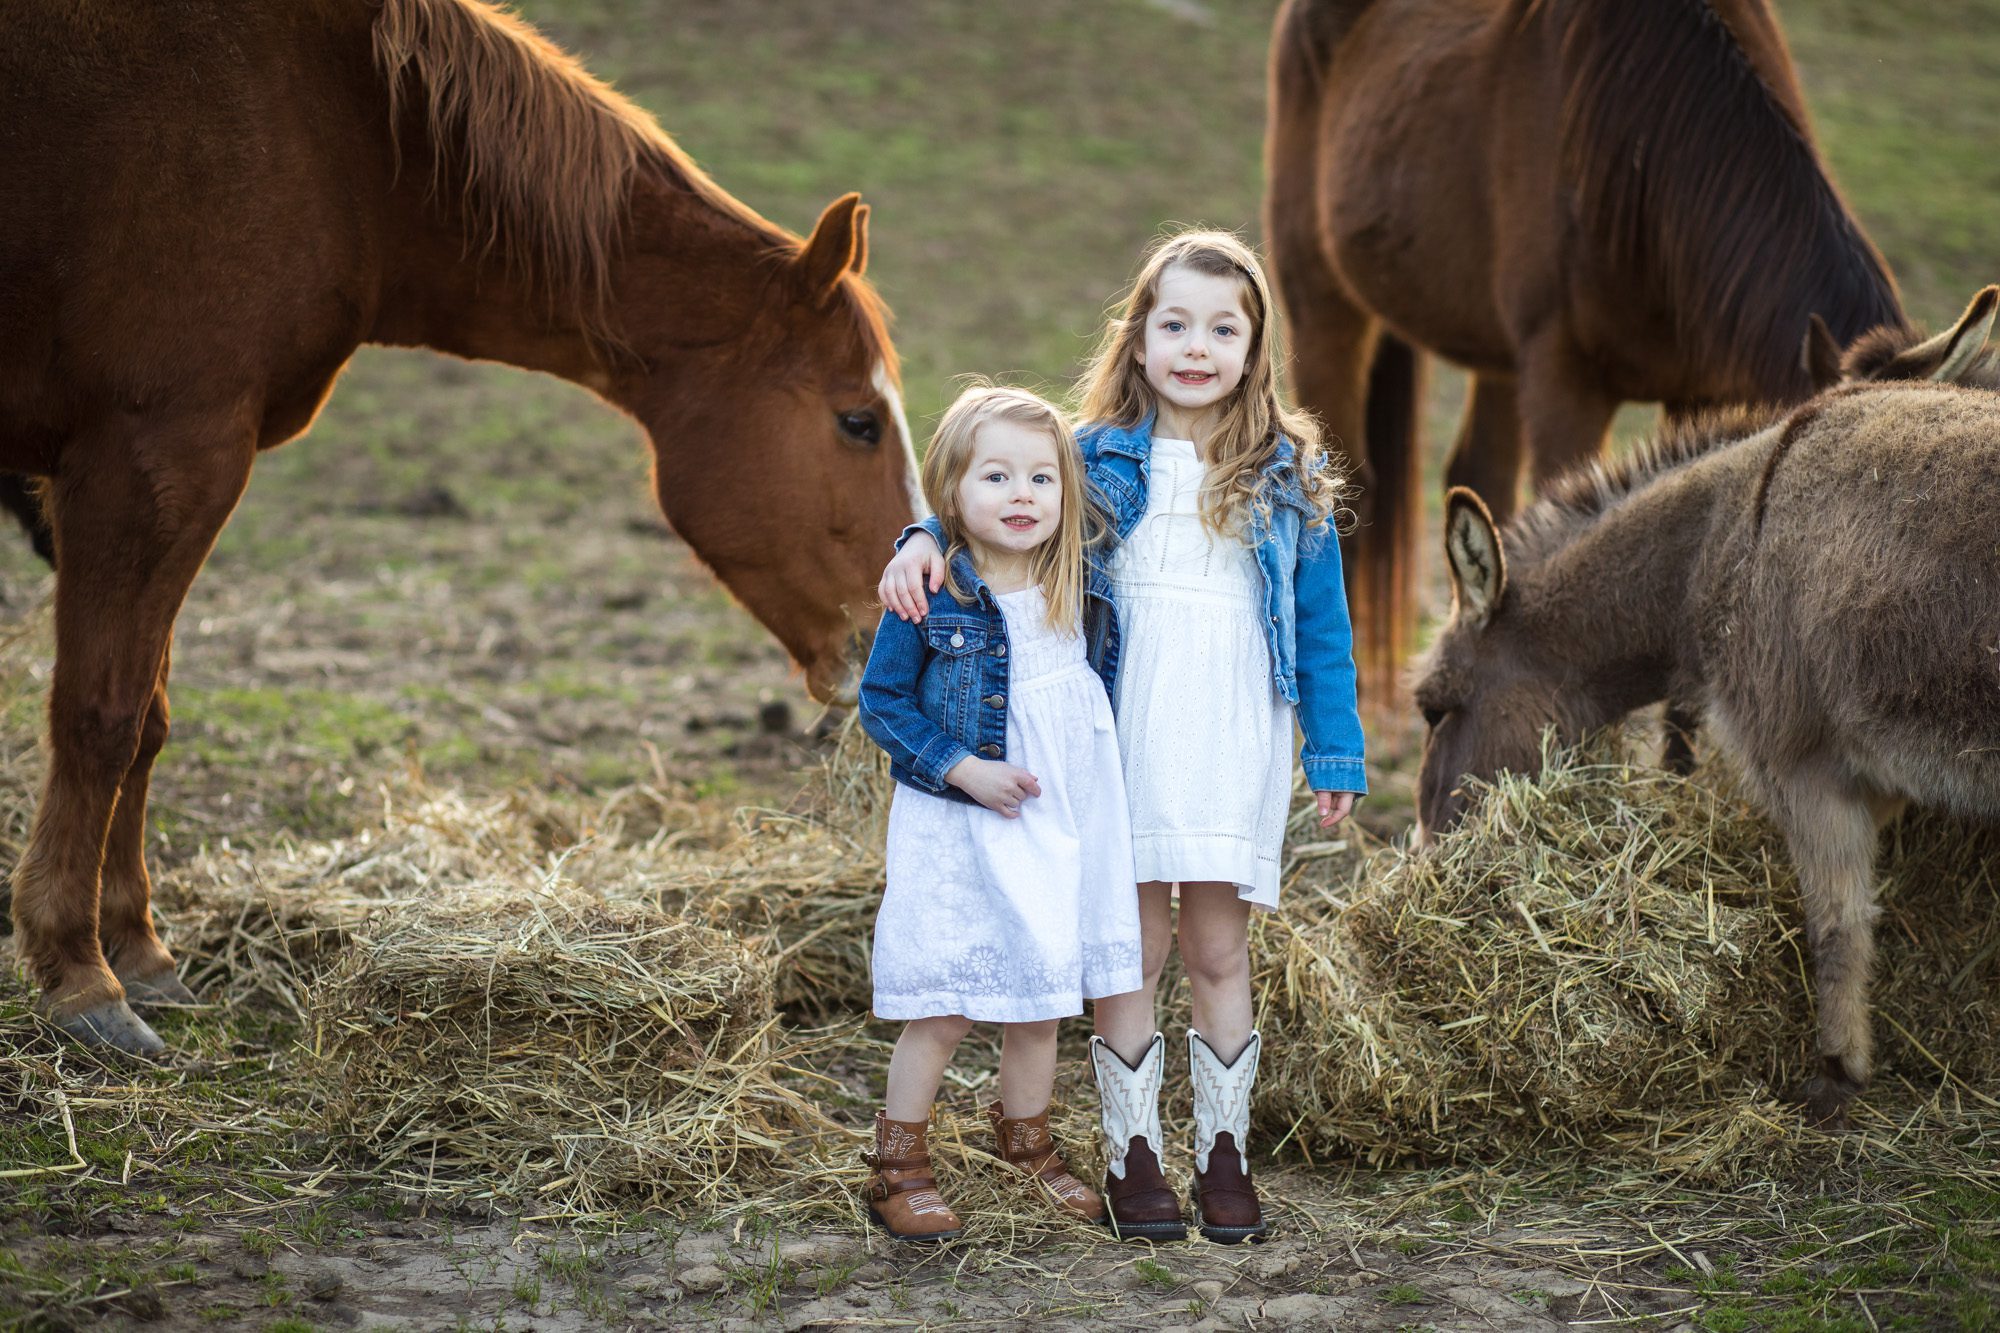 Girls with horses, Children's farm portrait photography, family portrait location ideas